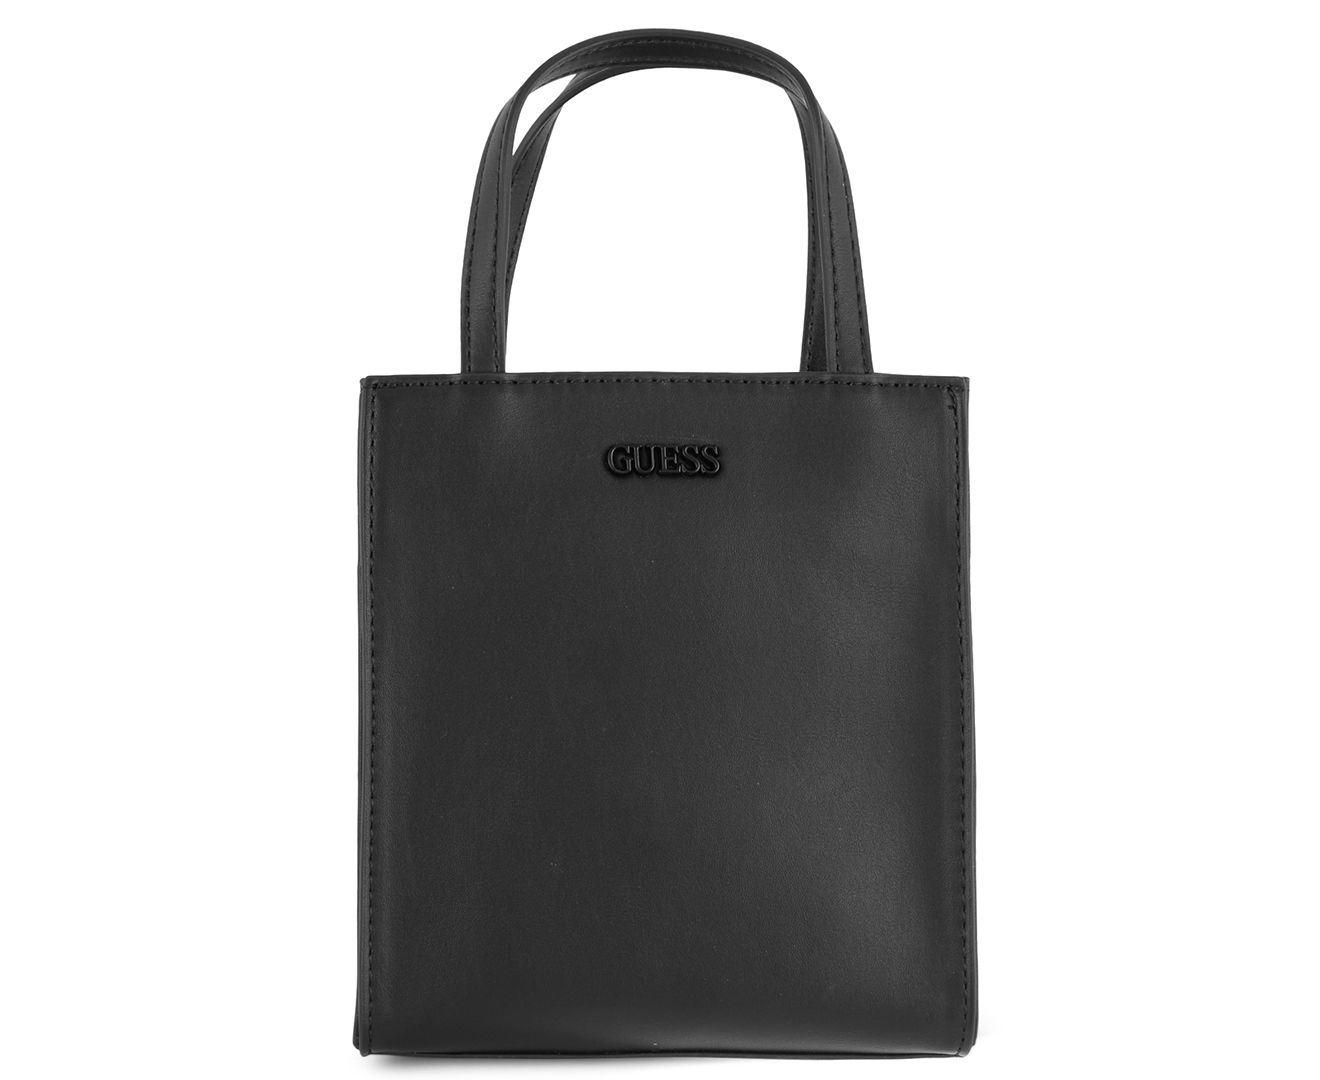 Guess - Picnic Mini Tote Handbag - Black